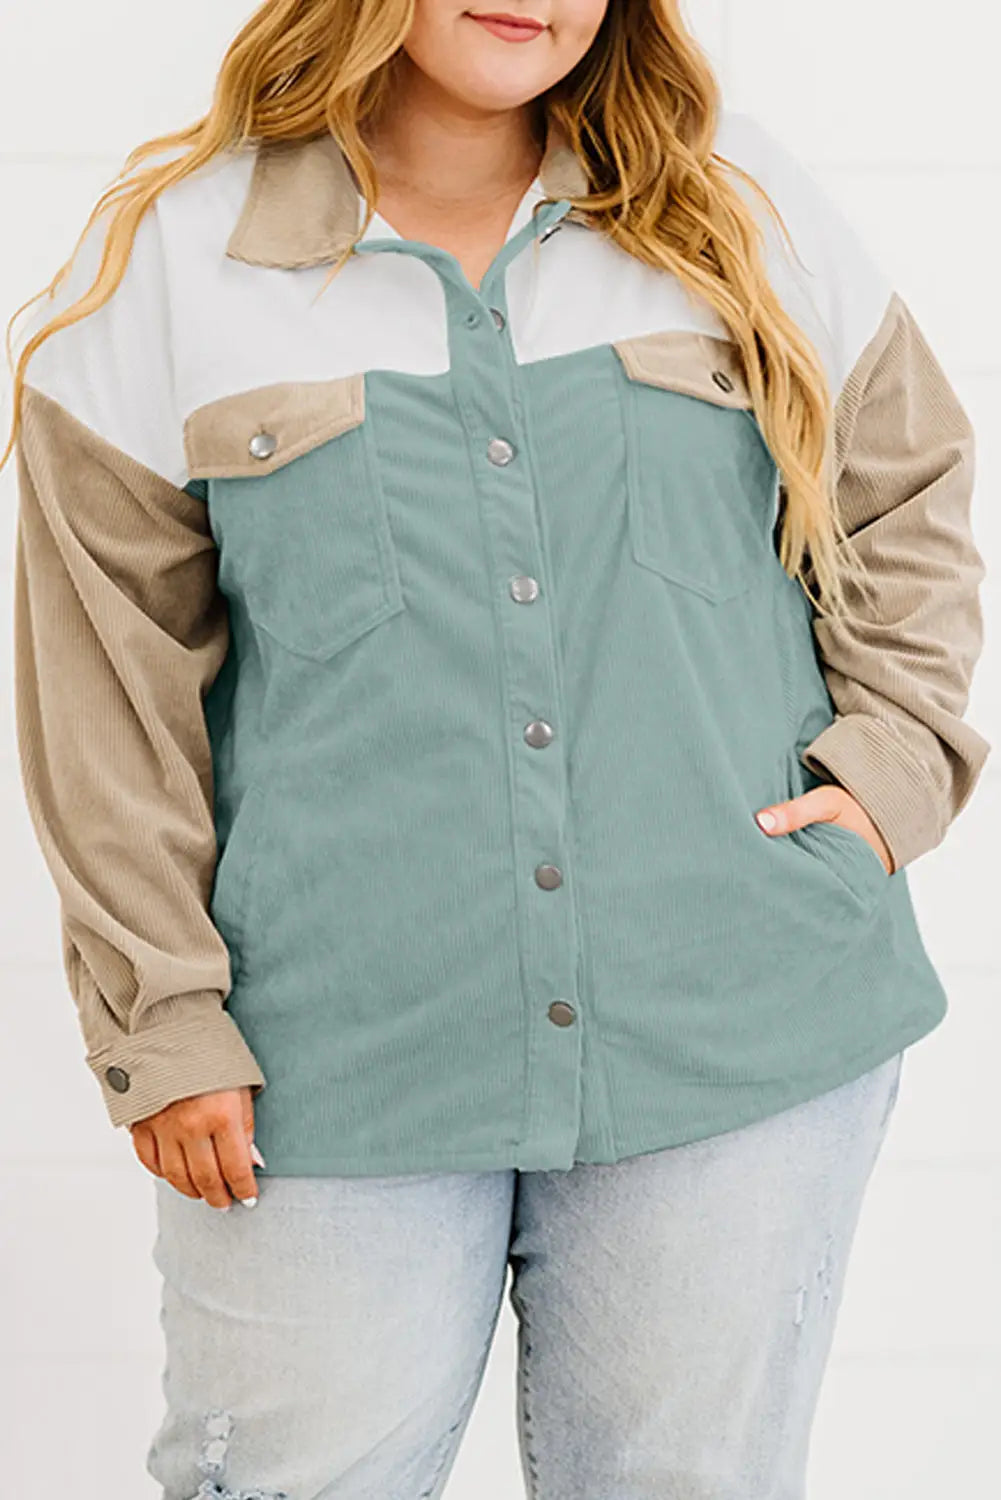 Multicolor color block buttoned pocket corduroy plus size jacket - 1x / 100% polyester